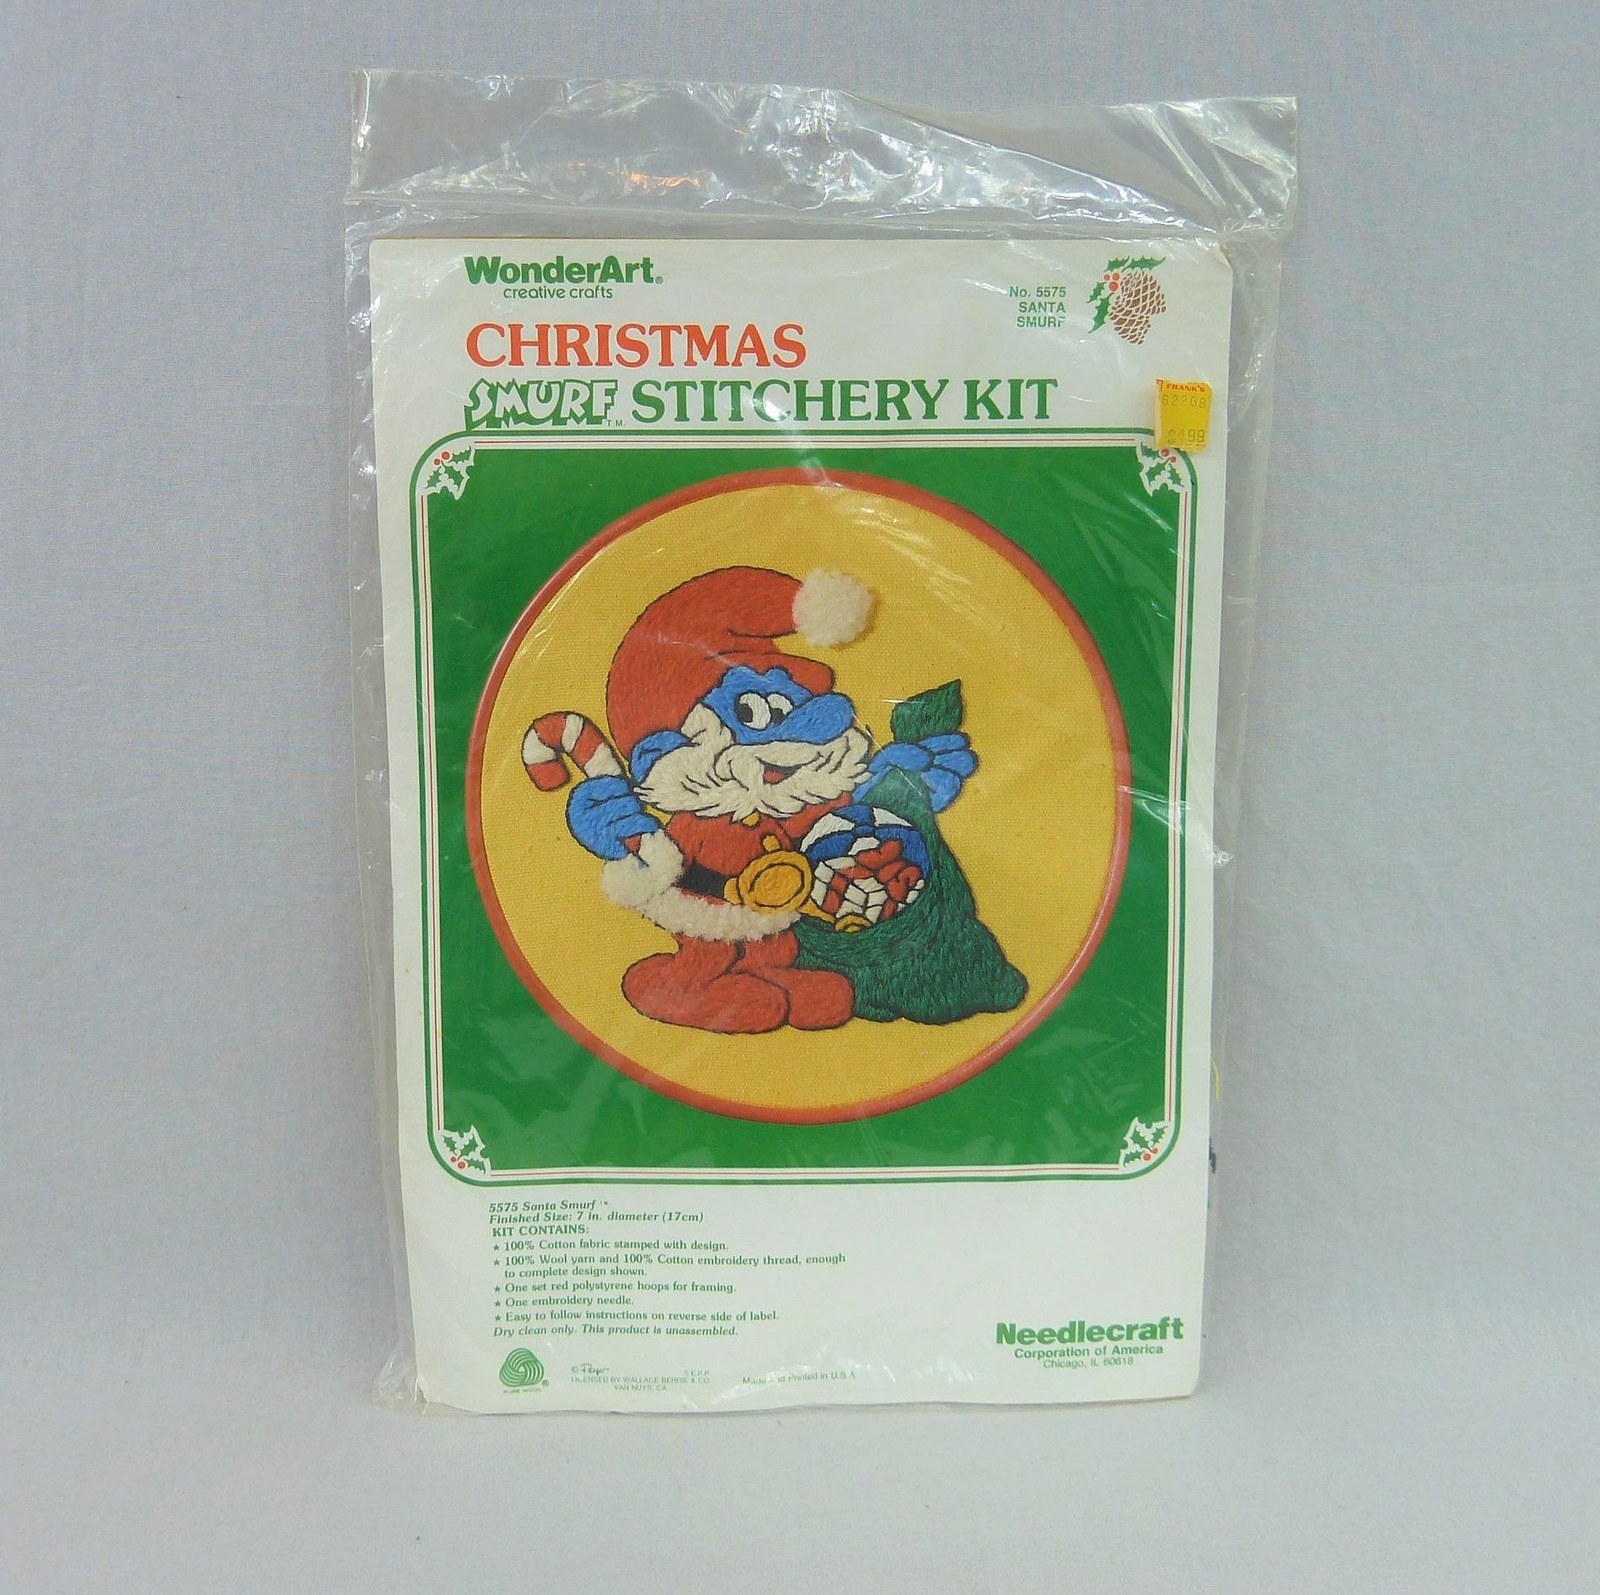 Christmas Stitchery kit